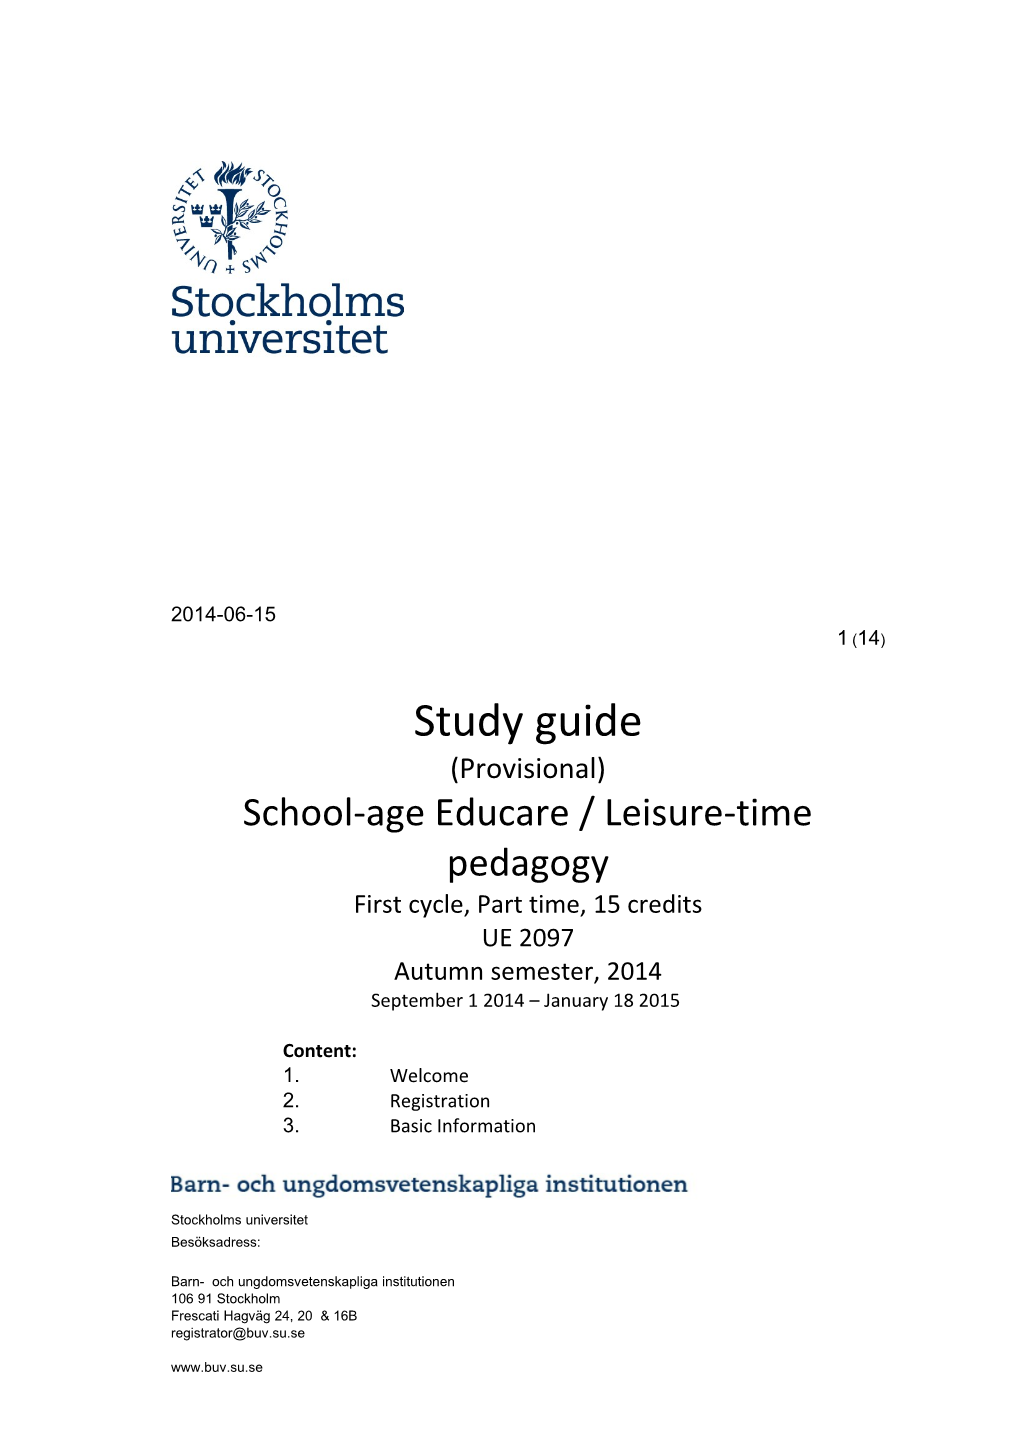 School-Age Educare / Leisure-Time Pedagogy